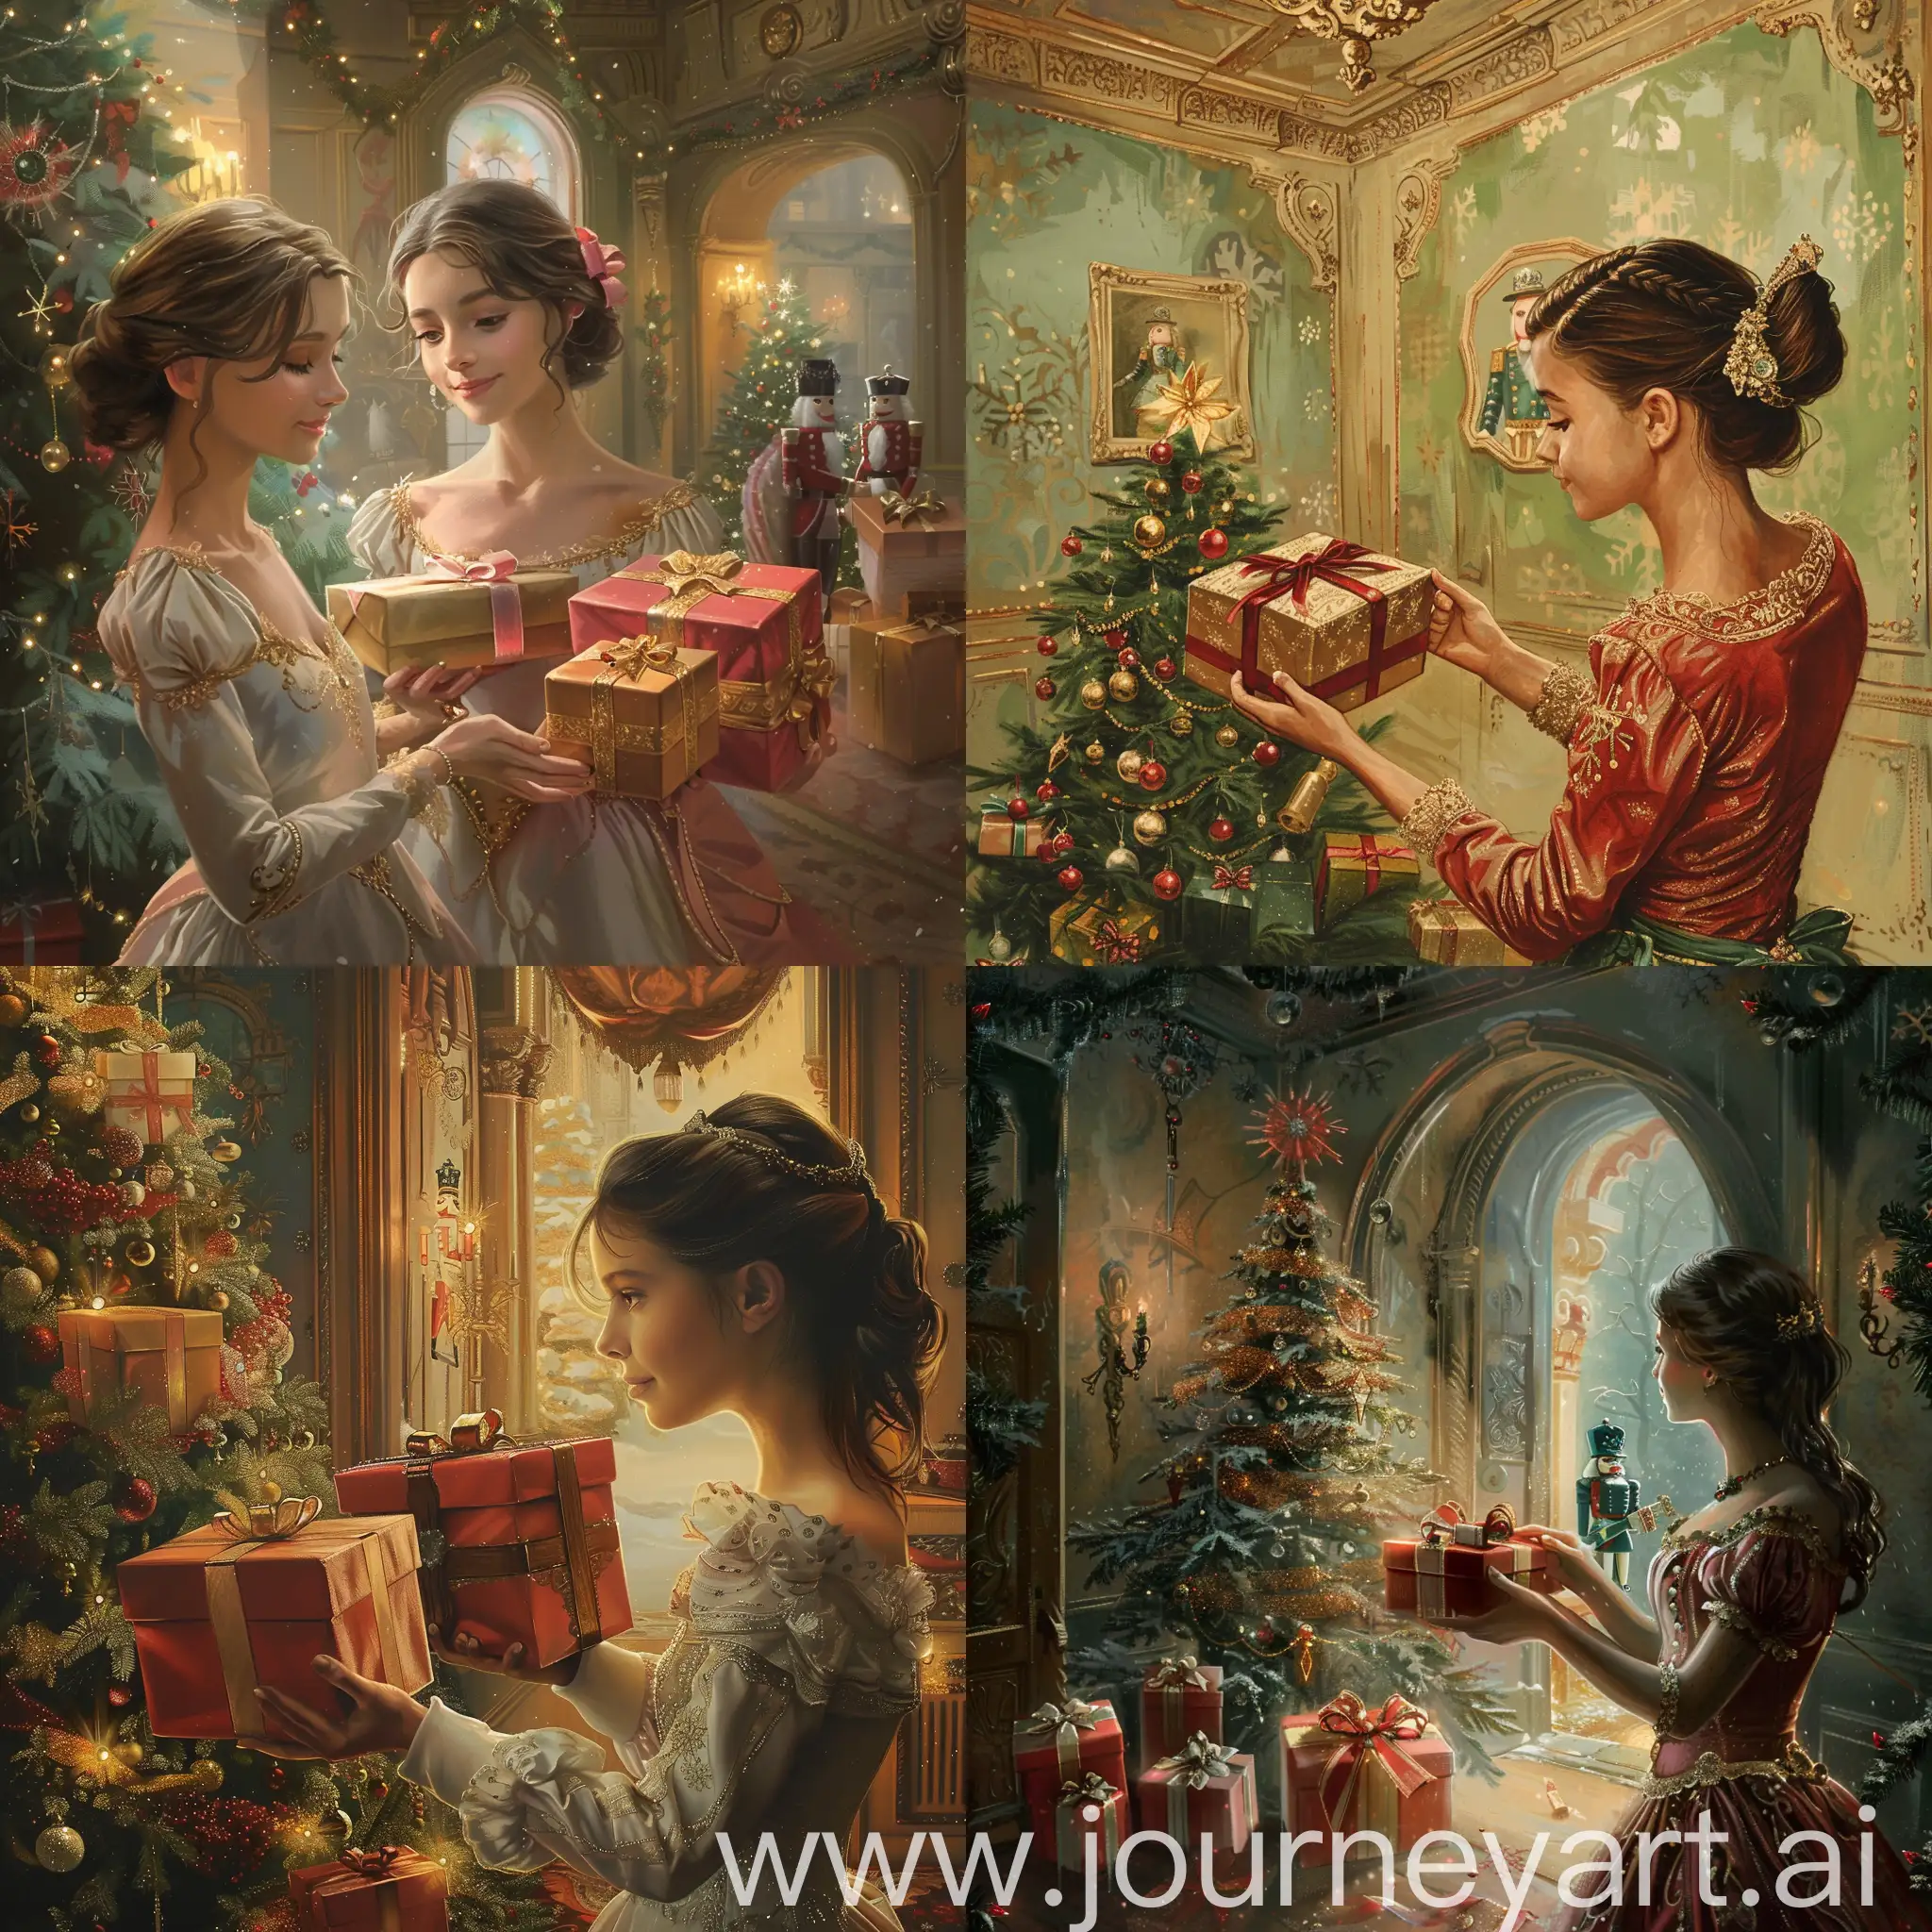 Marie-Receives-Gifts-in-Nutcracker-Fairy-Tale-Room